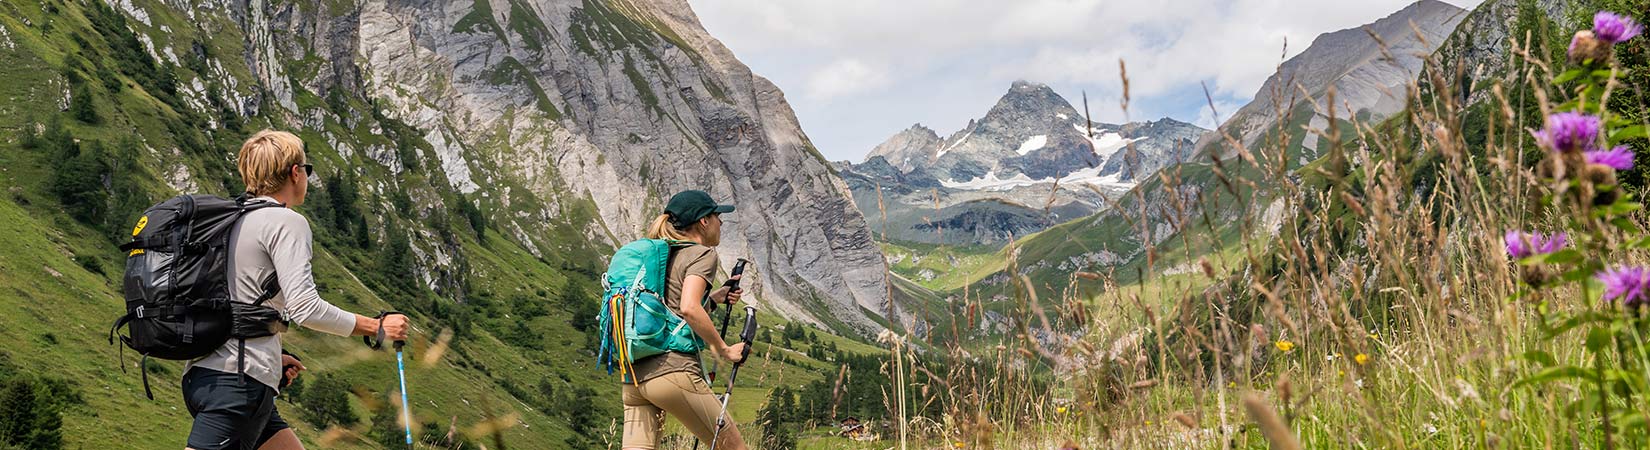 sommerurlaub nationalpark hohe tauern TVB Osttirol Peter Maier Kals am Großglockner